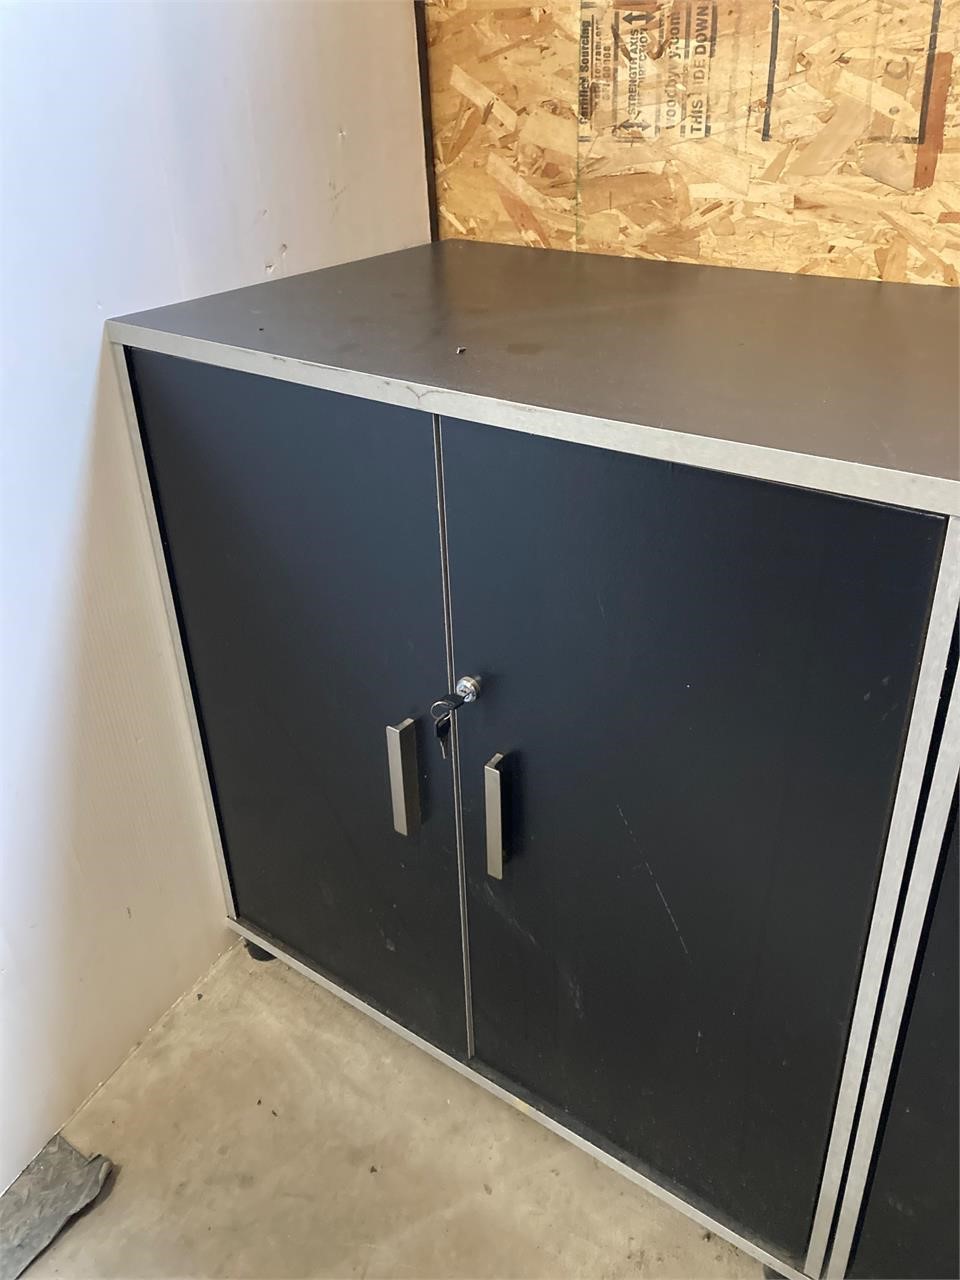 Shop cabinet 29.75” x 19.75” x 31” high. Lockable